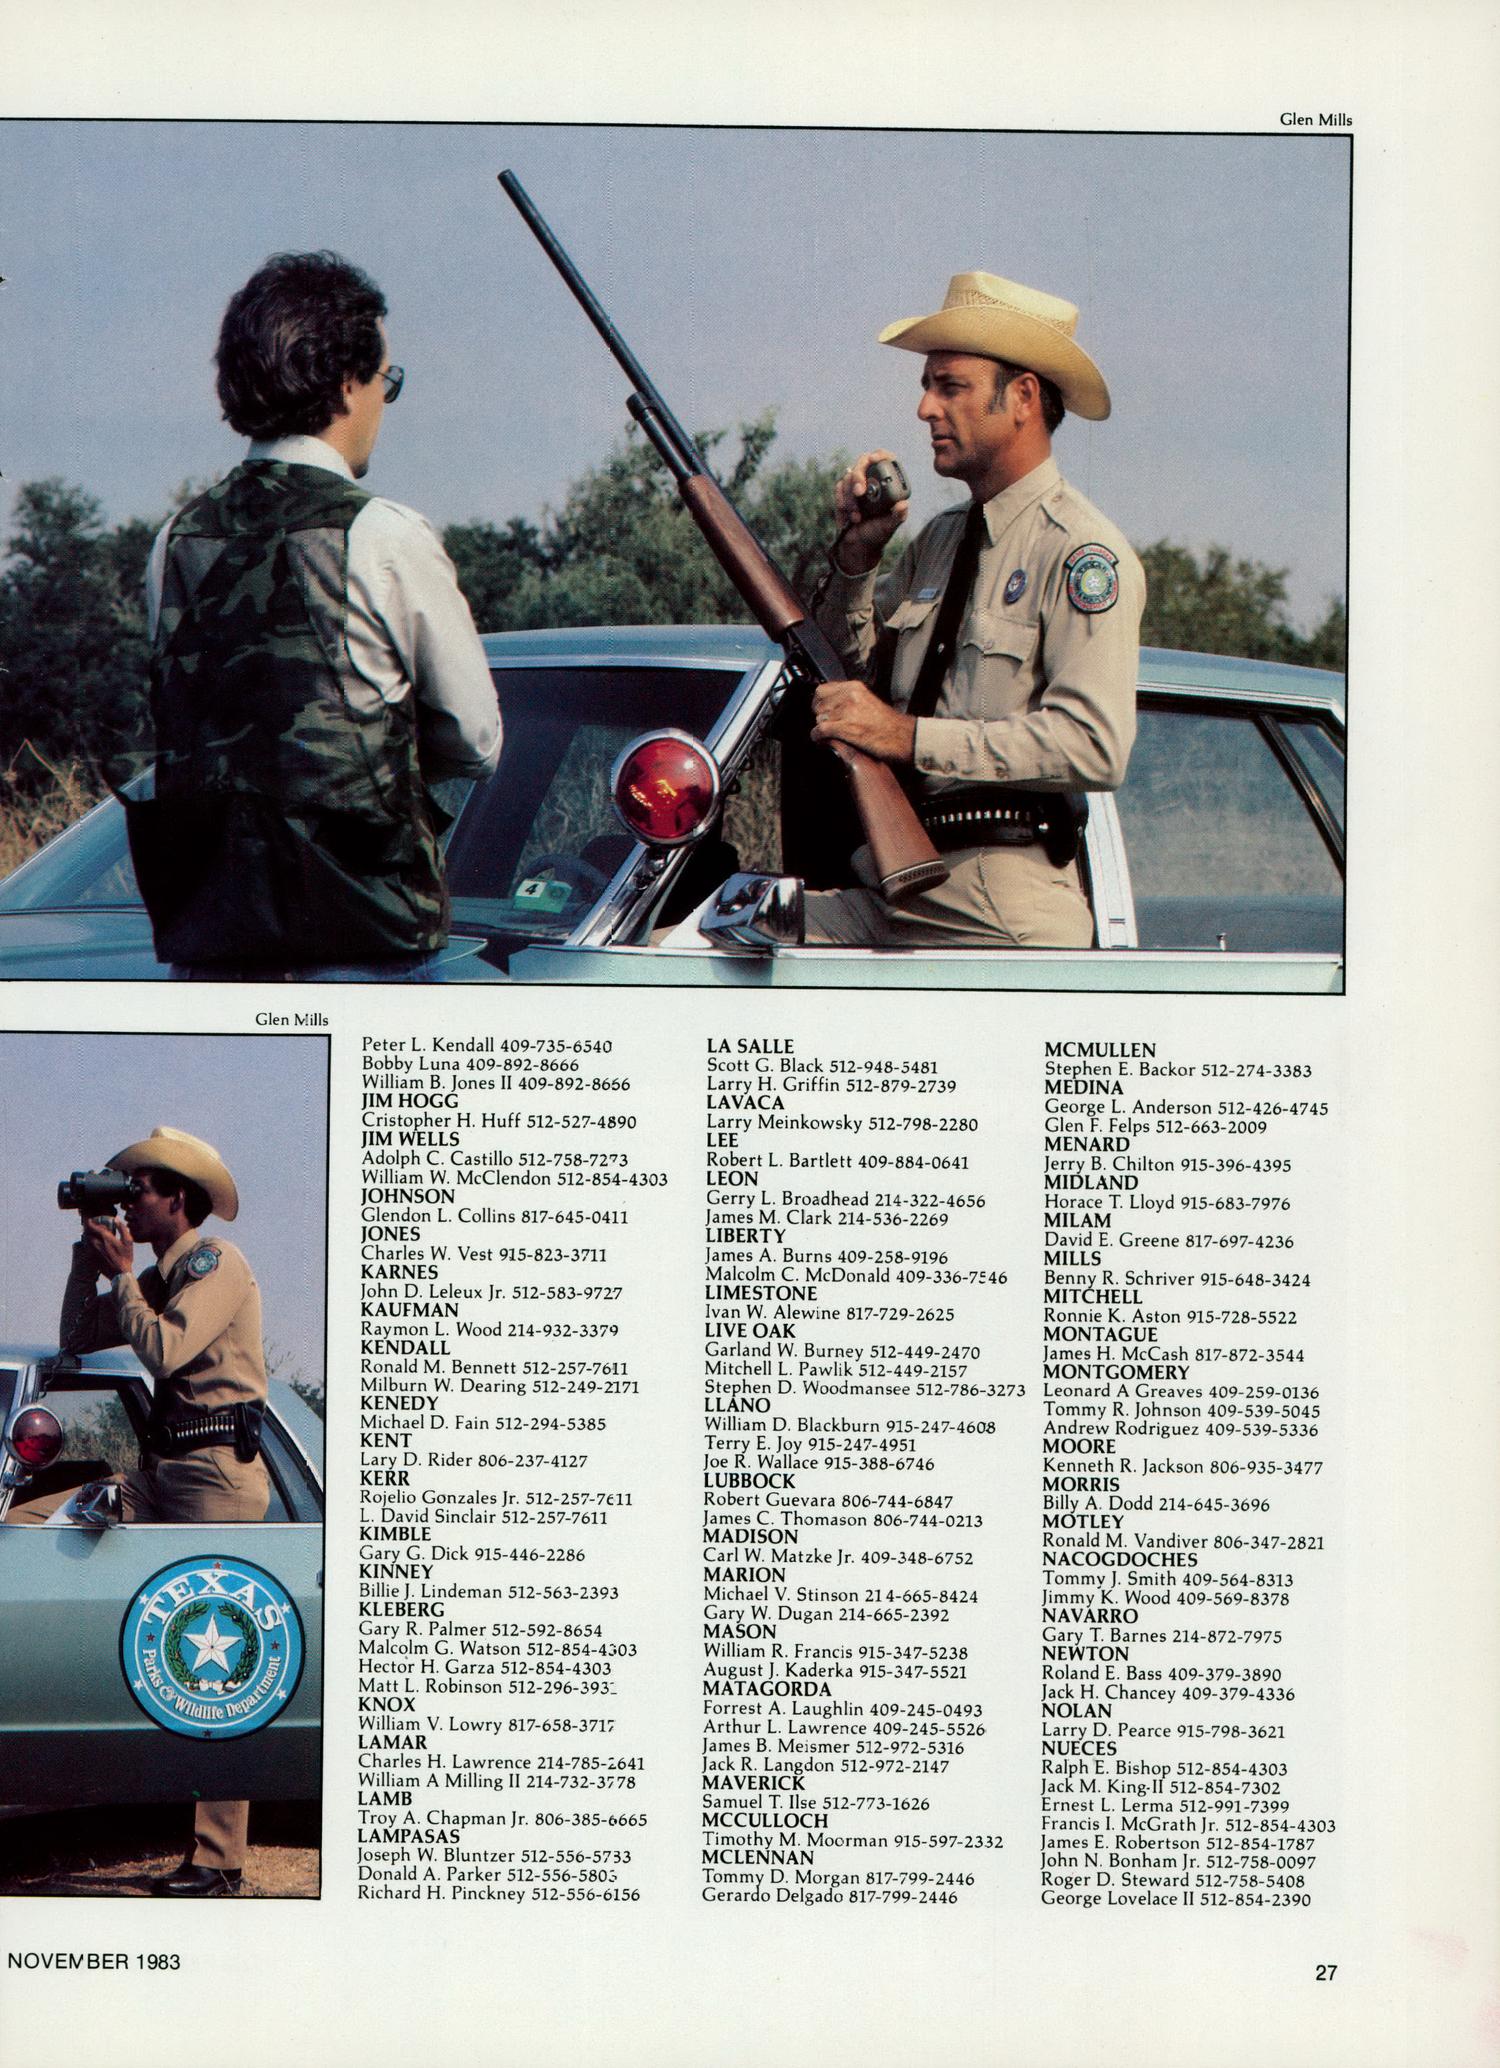 Texas Parks & Wildlife, Volume 41, Number 11, November 1983
                                                
                                                    27
                                                